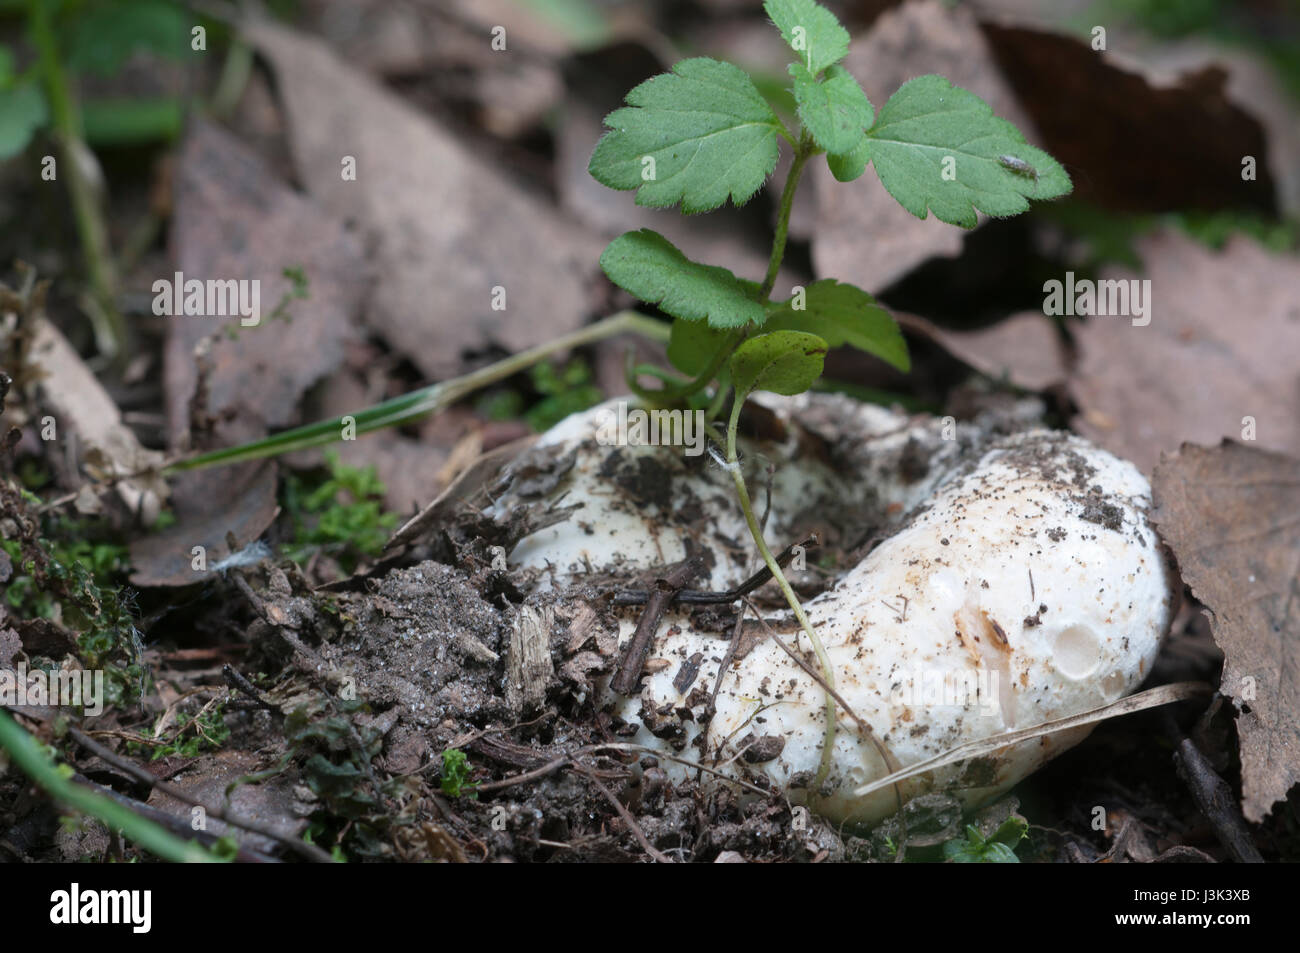 Milk-white brittlegill (Russula delica) mushroom, close up shot Stock Photo